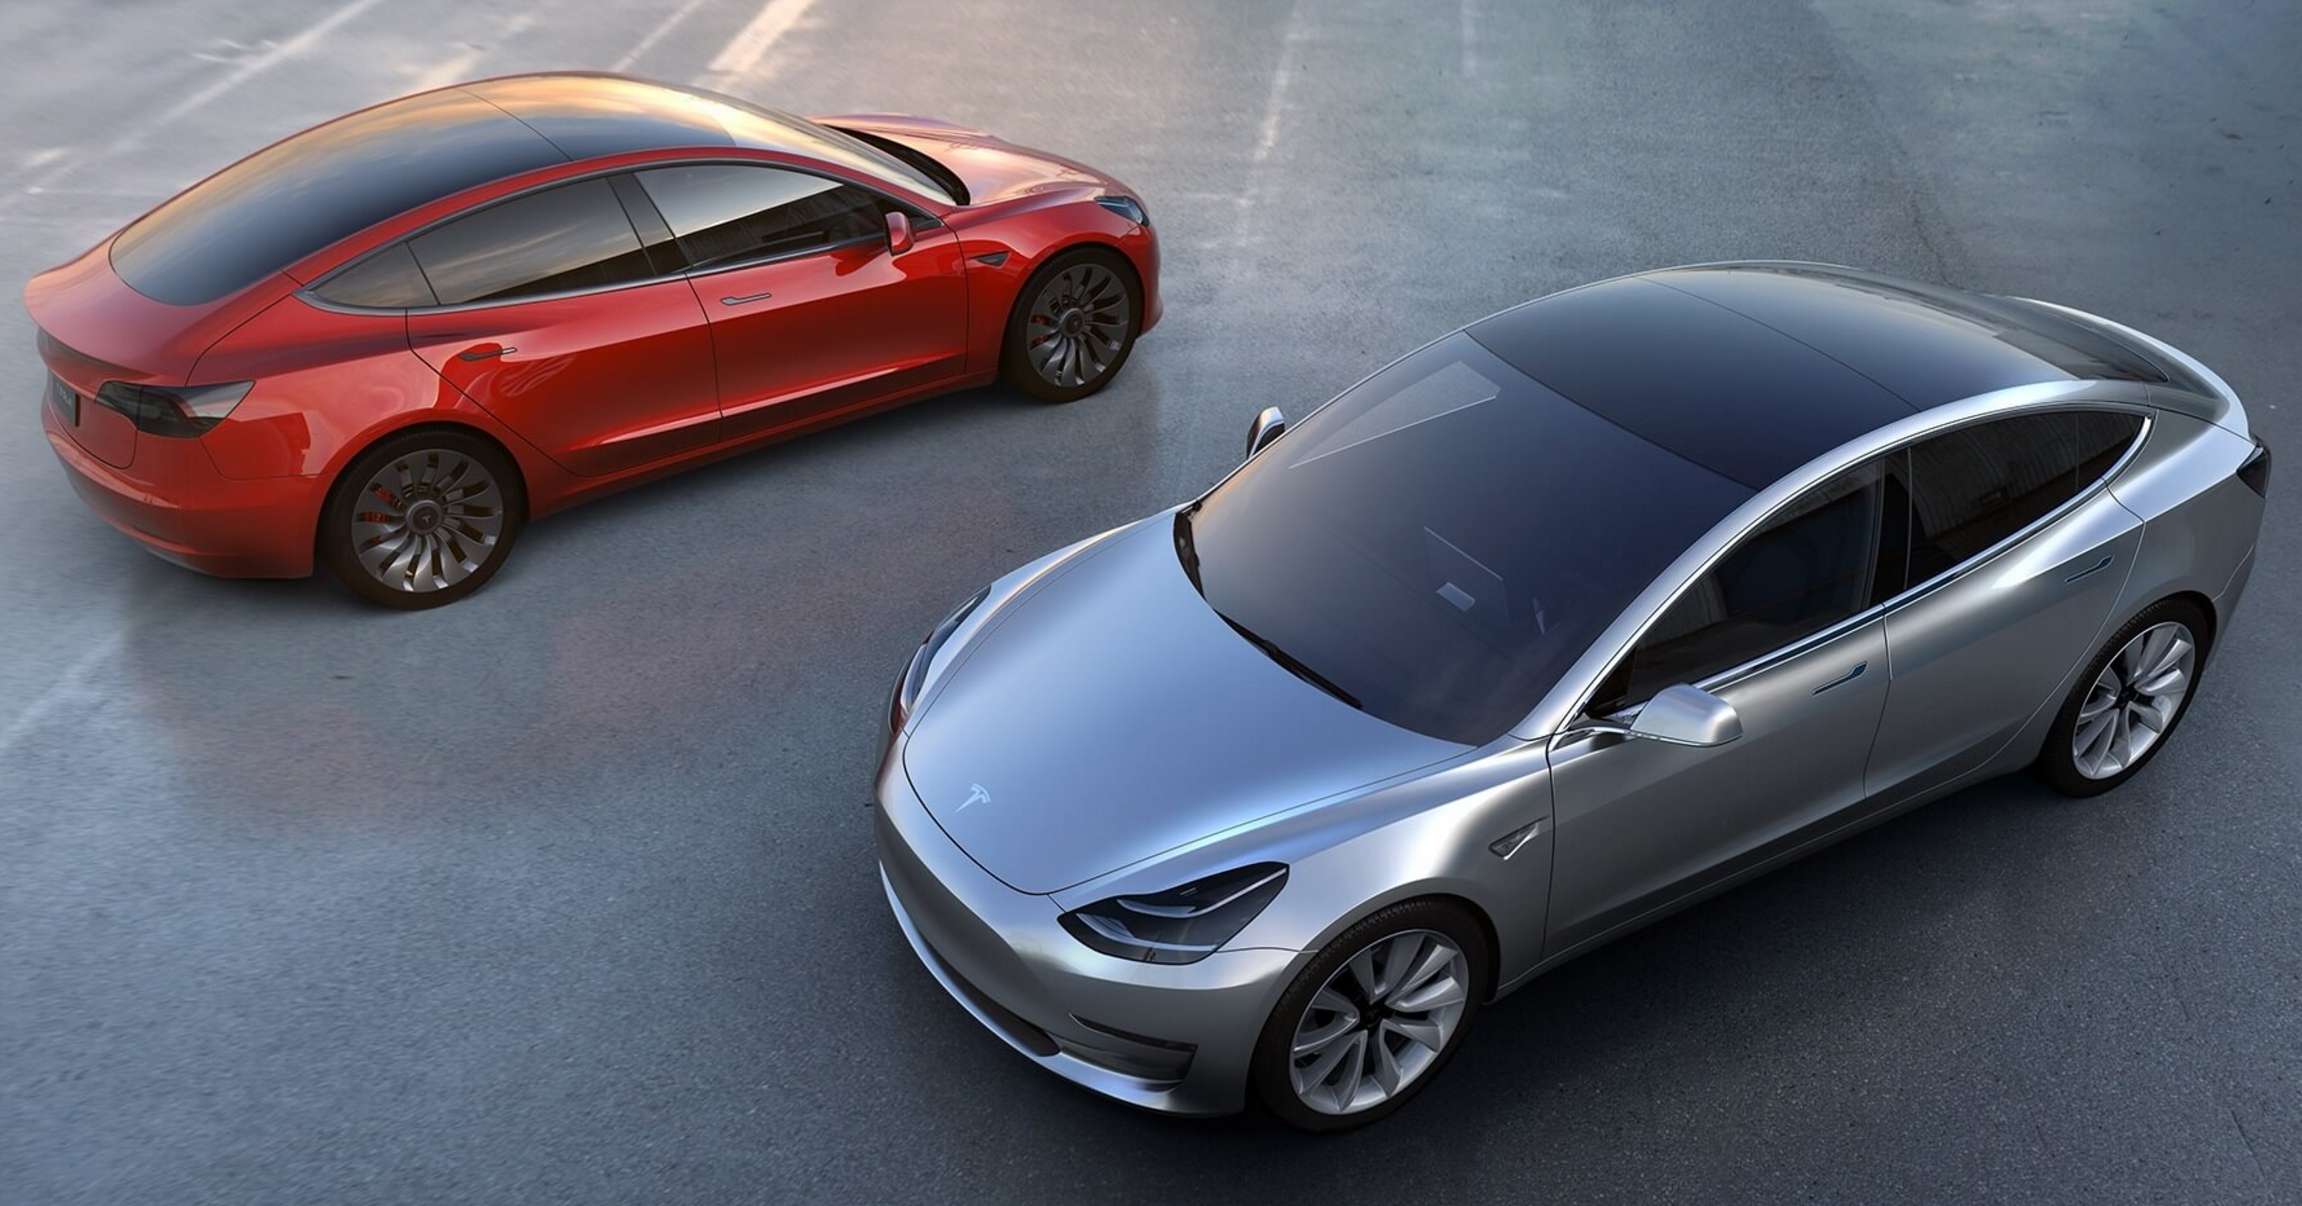 The Tesla 3. Photo: SCMP Handout